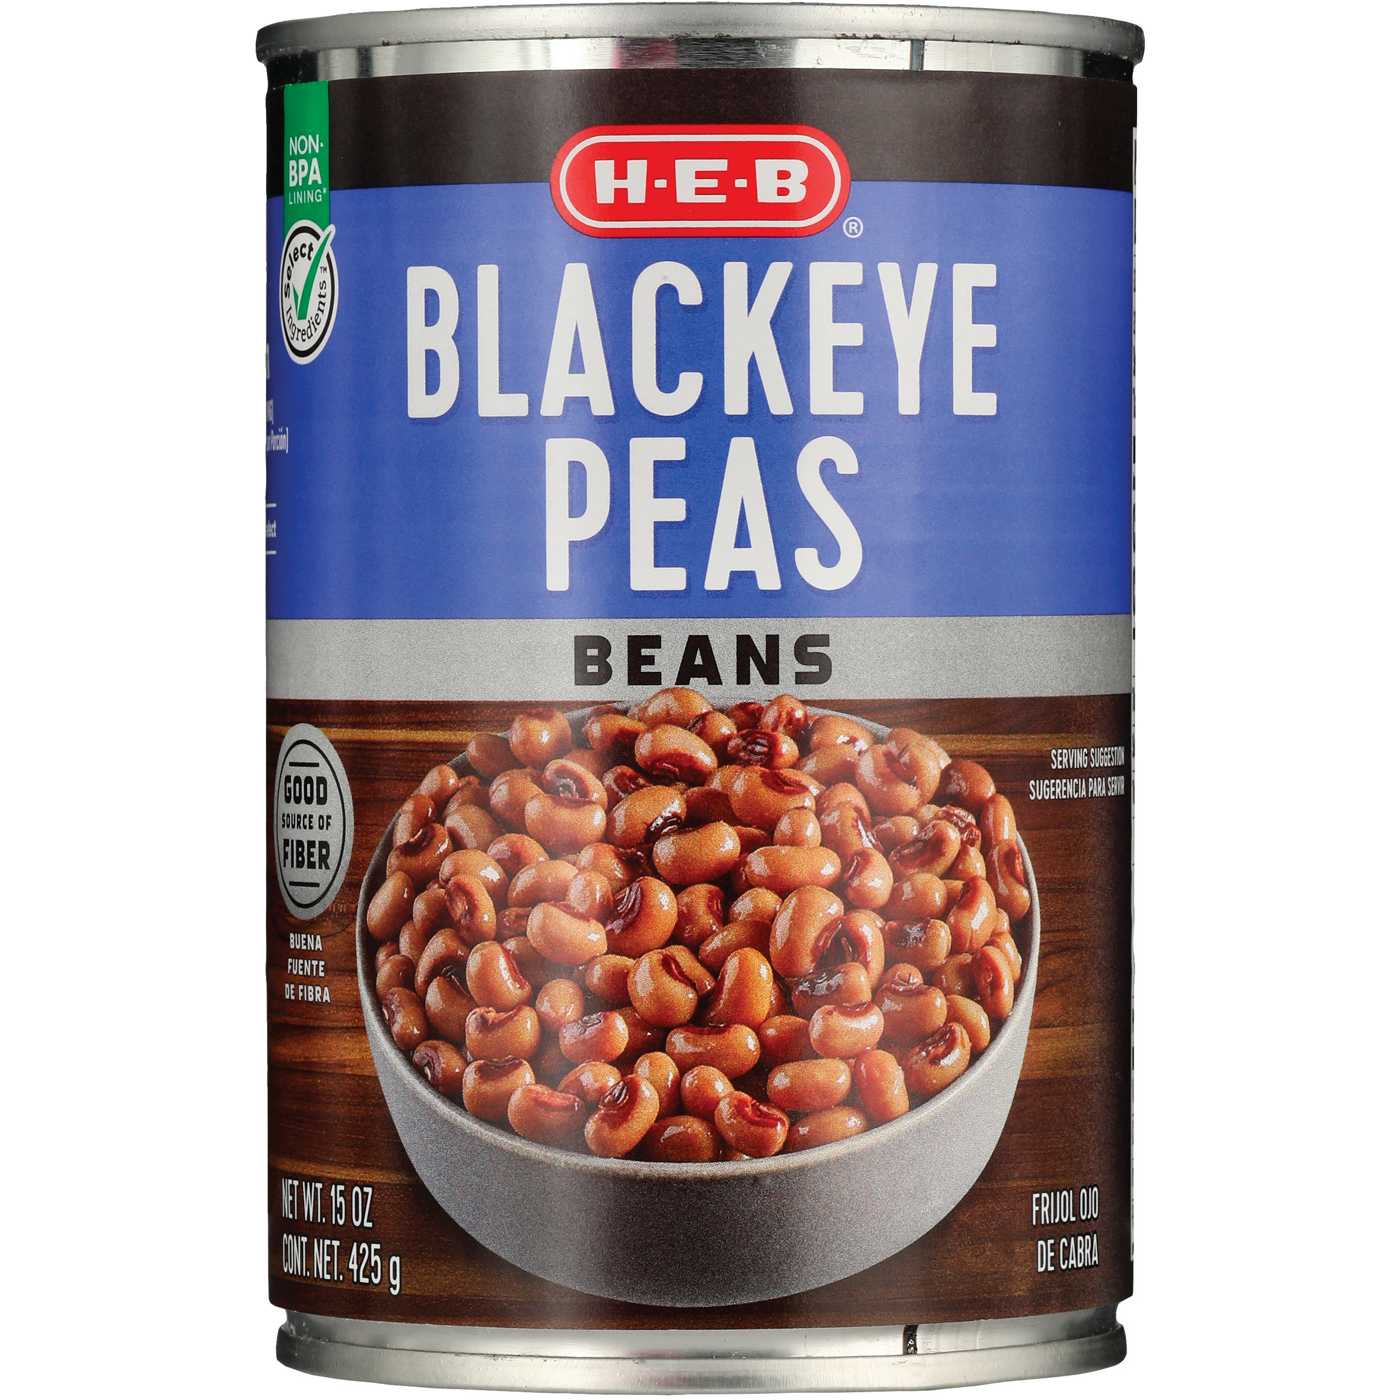 H-E-B Black-Eyed Peas; image 1 of 2